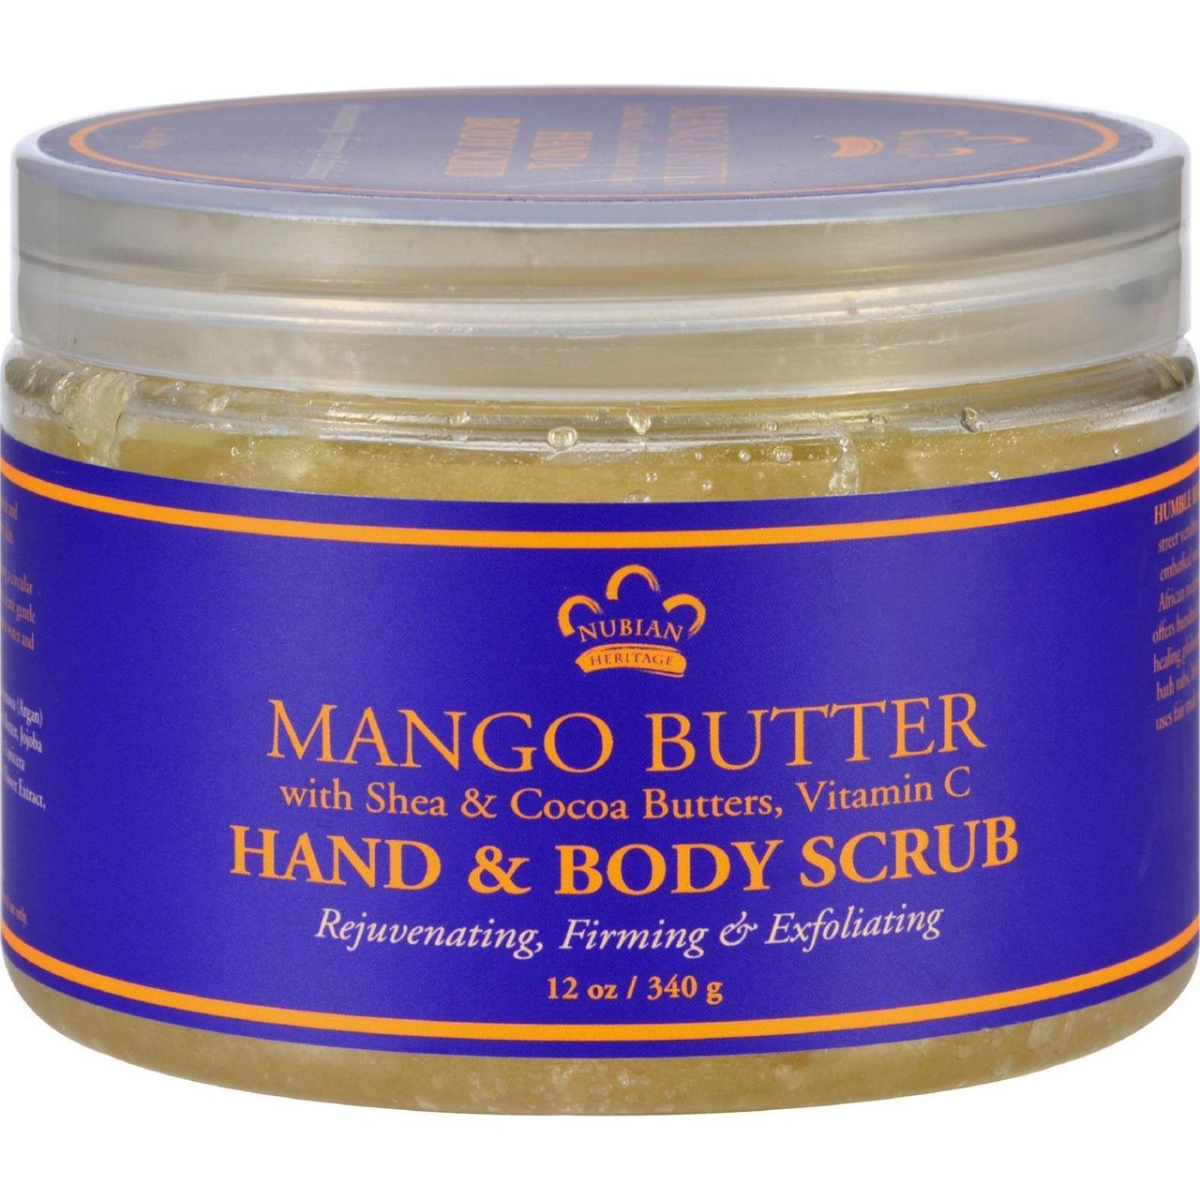 Hg1703032 12 Oz Hand & Body Scrub - Mango Butter